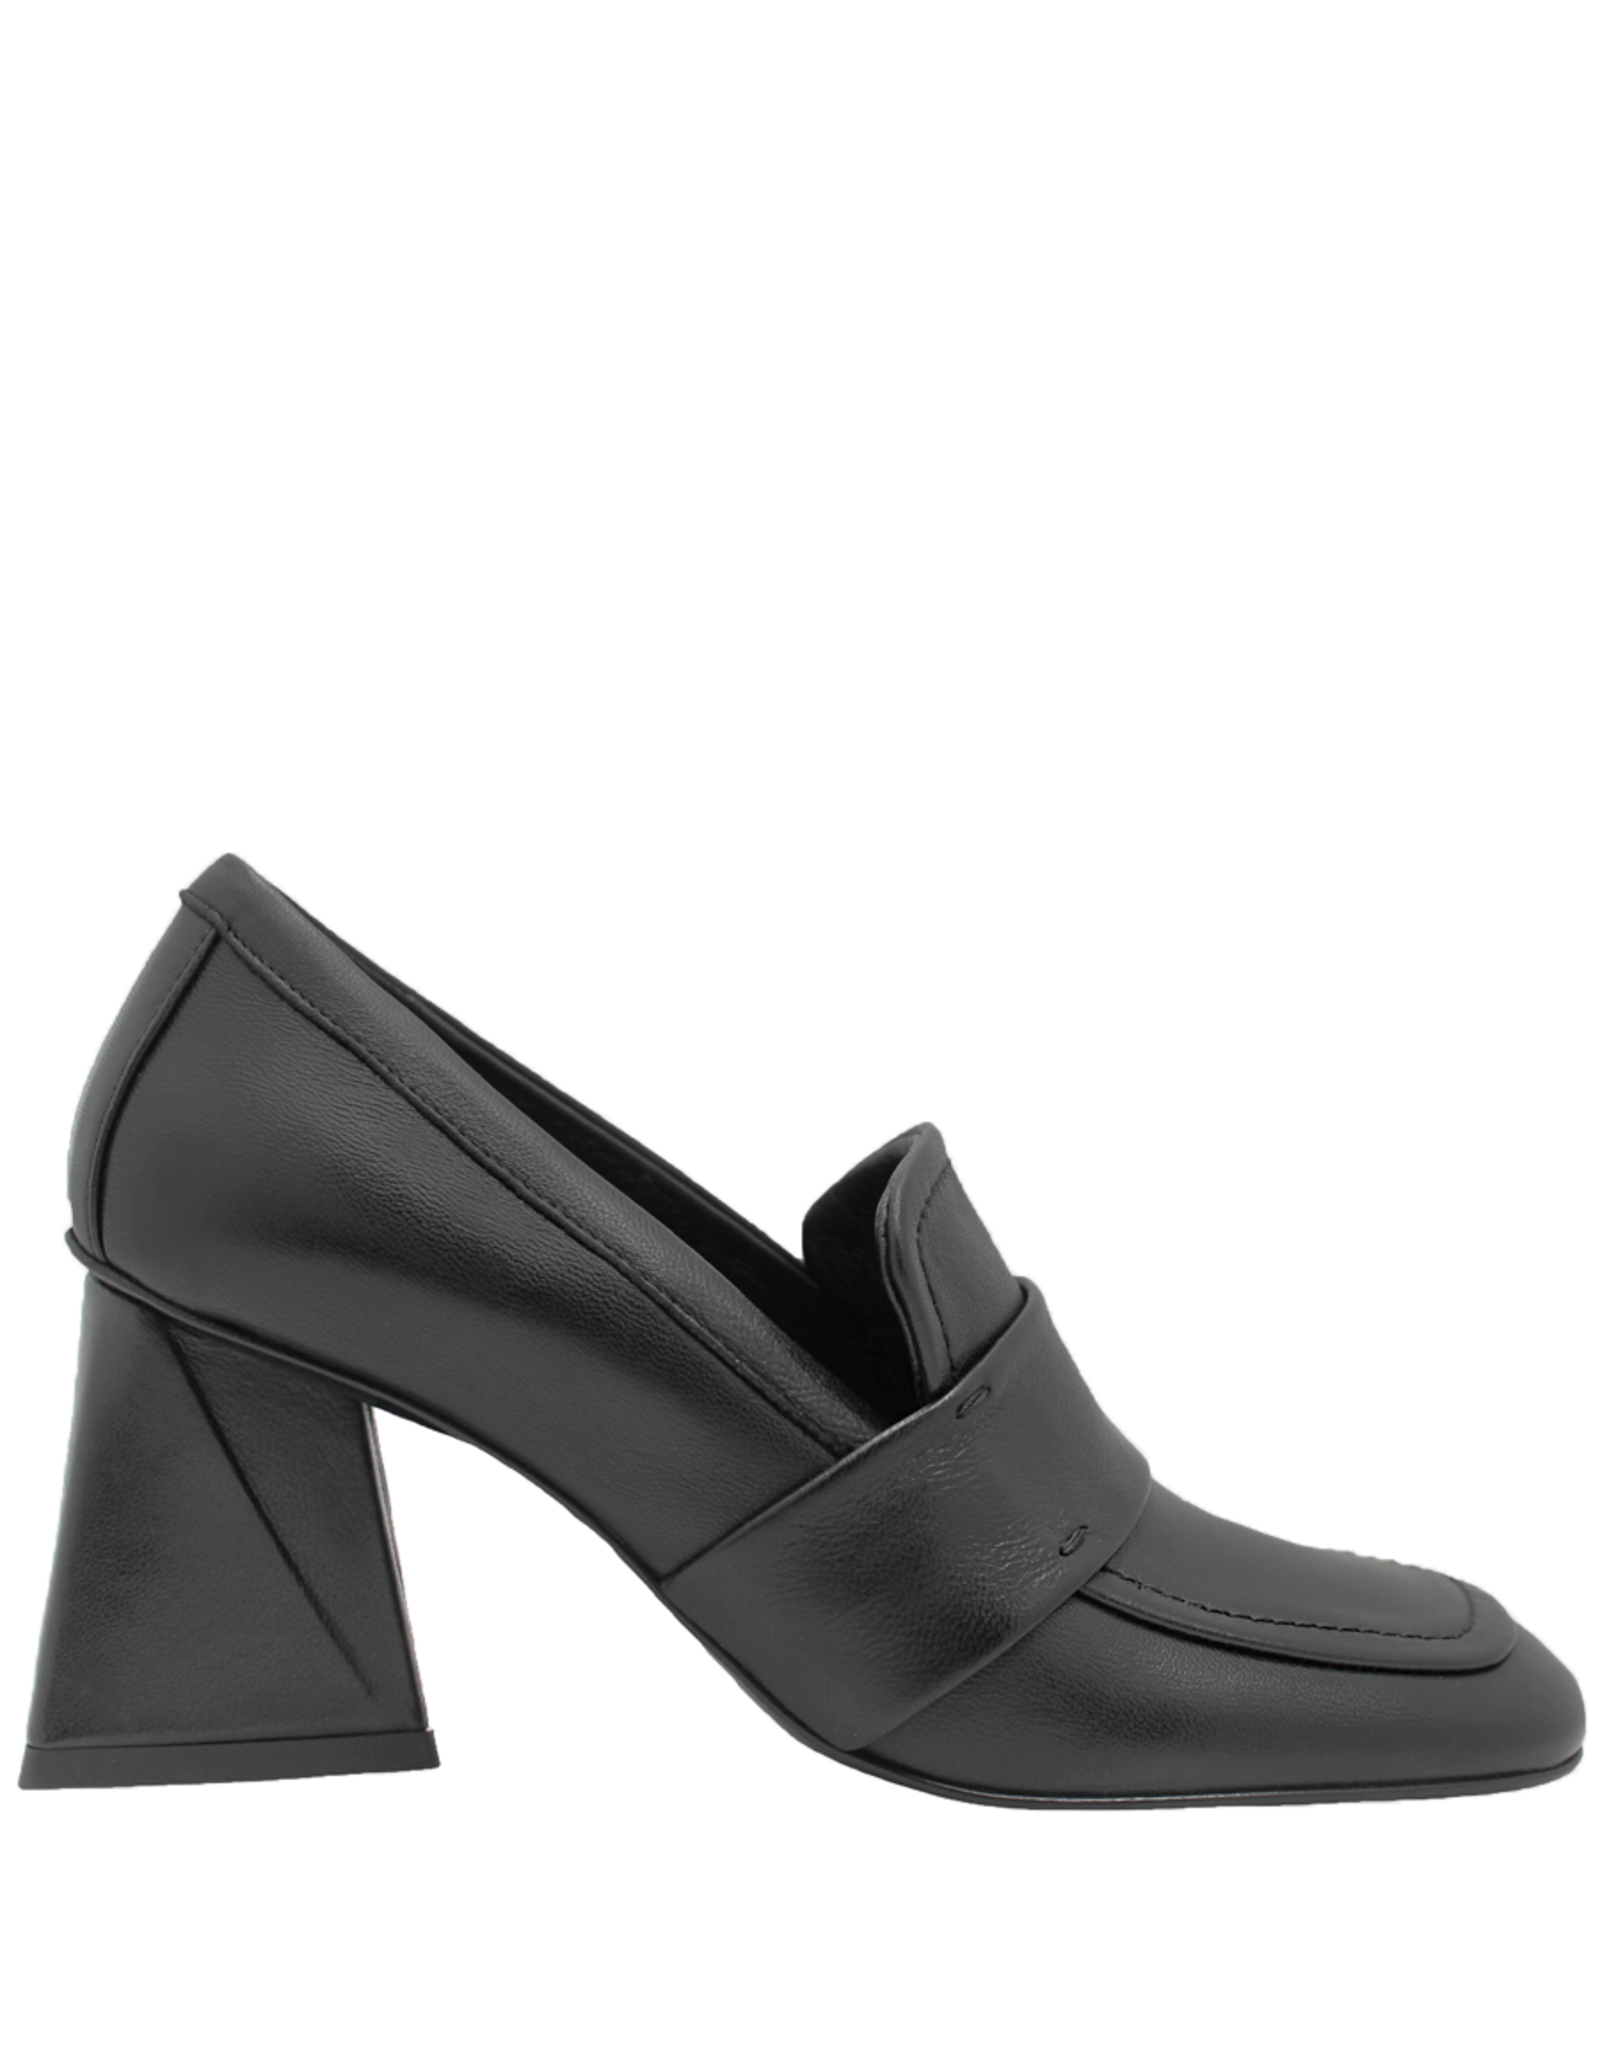 Elena Iachi ElenaIachi Black Square Toe Loafer Medium Heel 5183